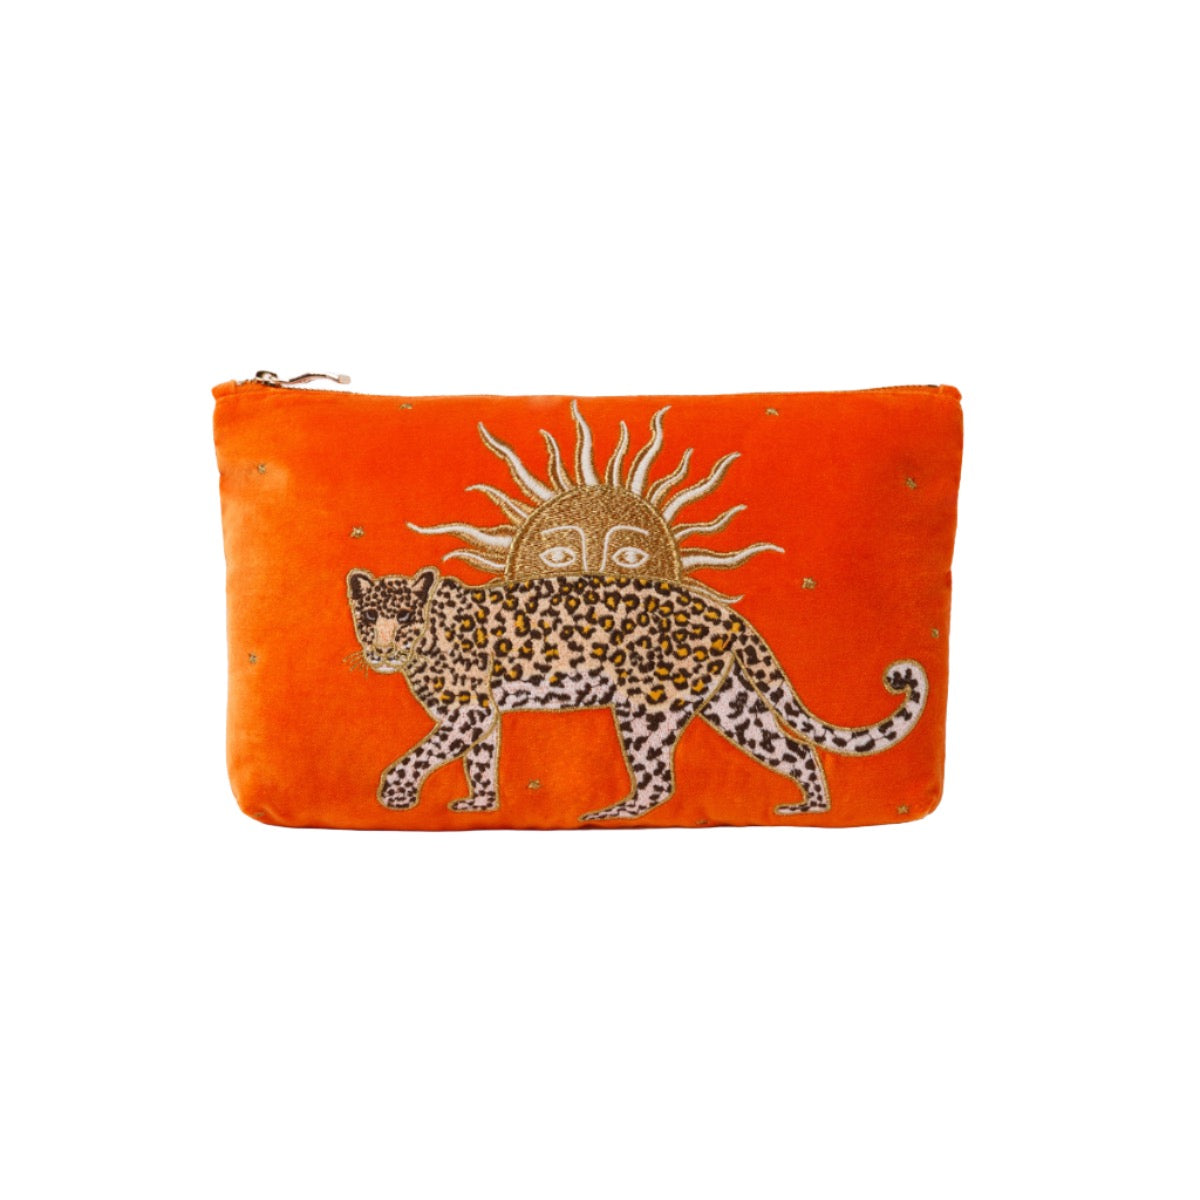 The Luxury Sunburst Orange Velvet Embroidered Cosmetic Bag with Leopard Motif